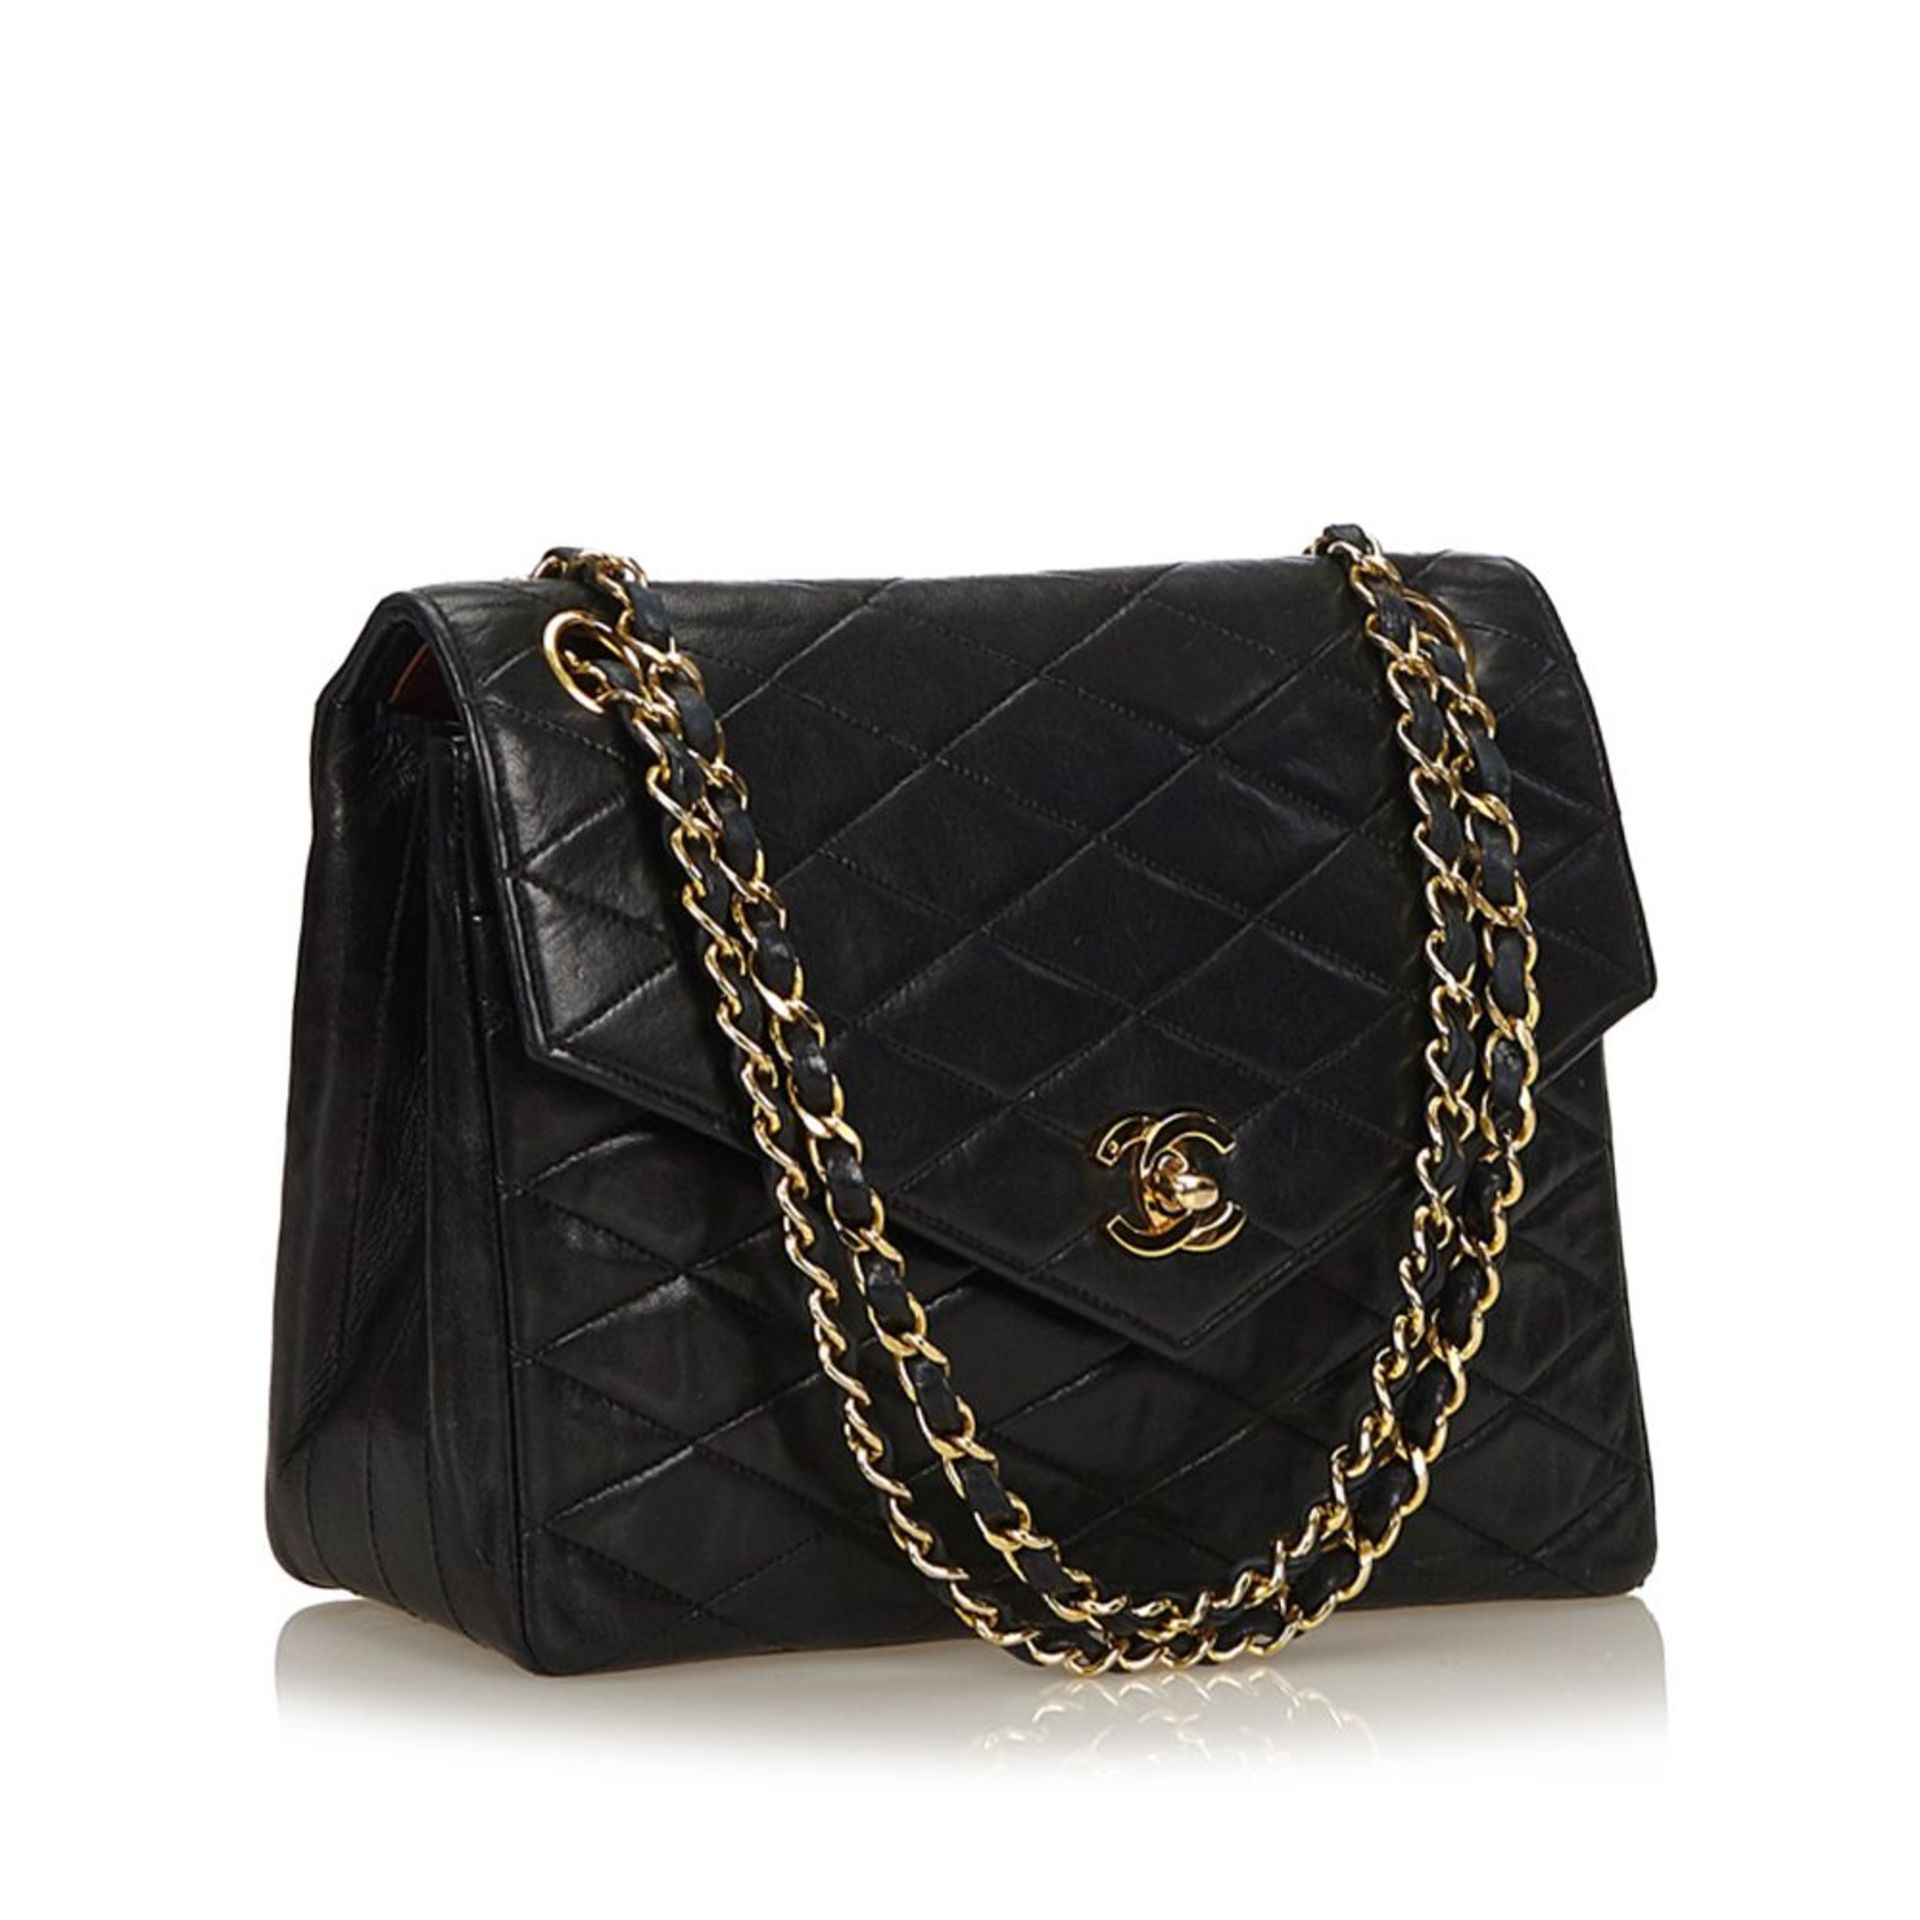 A Chanel matelassé leather chain flap bag,featuring a leather body, exterior back open pocket, - Bild 2 aus 5